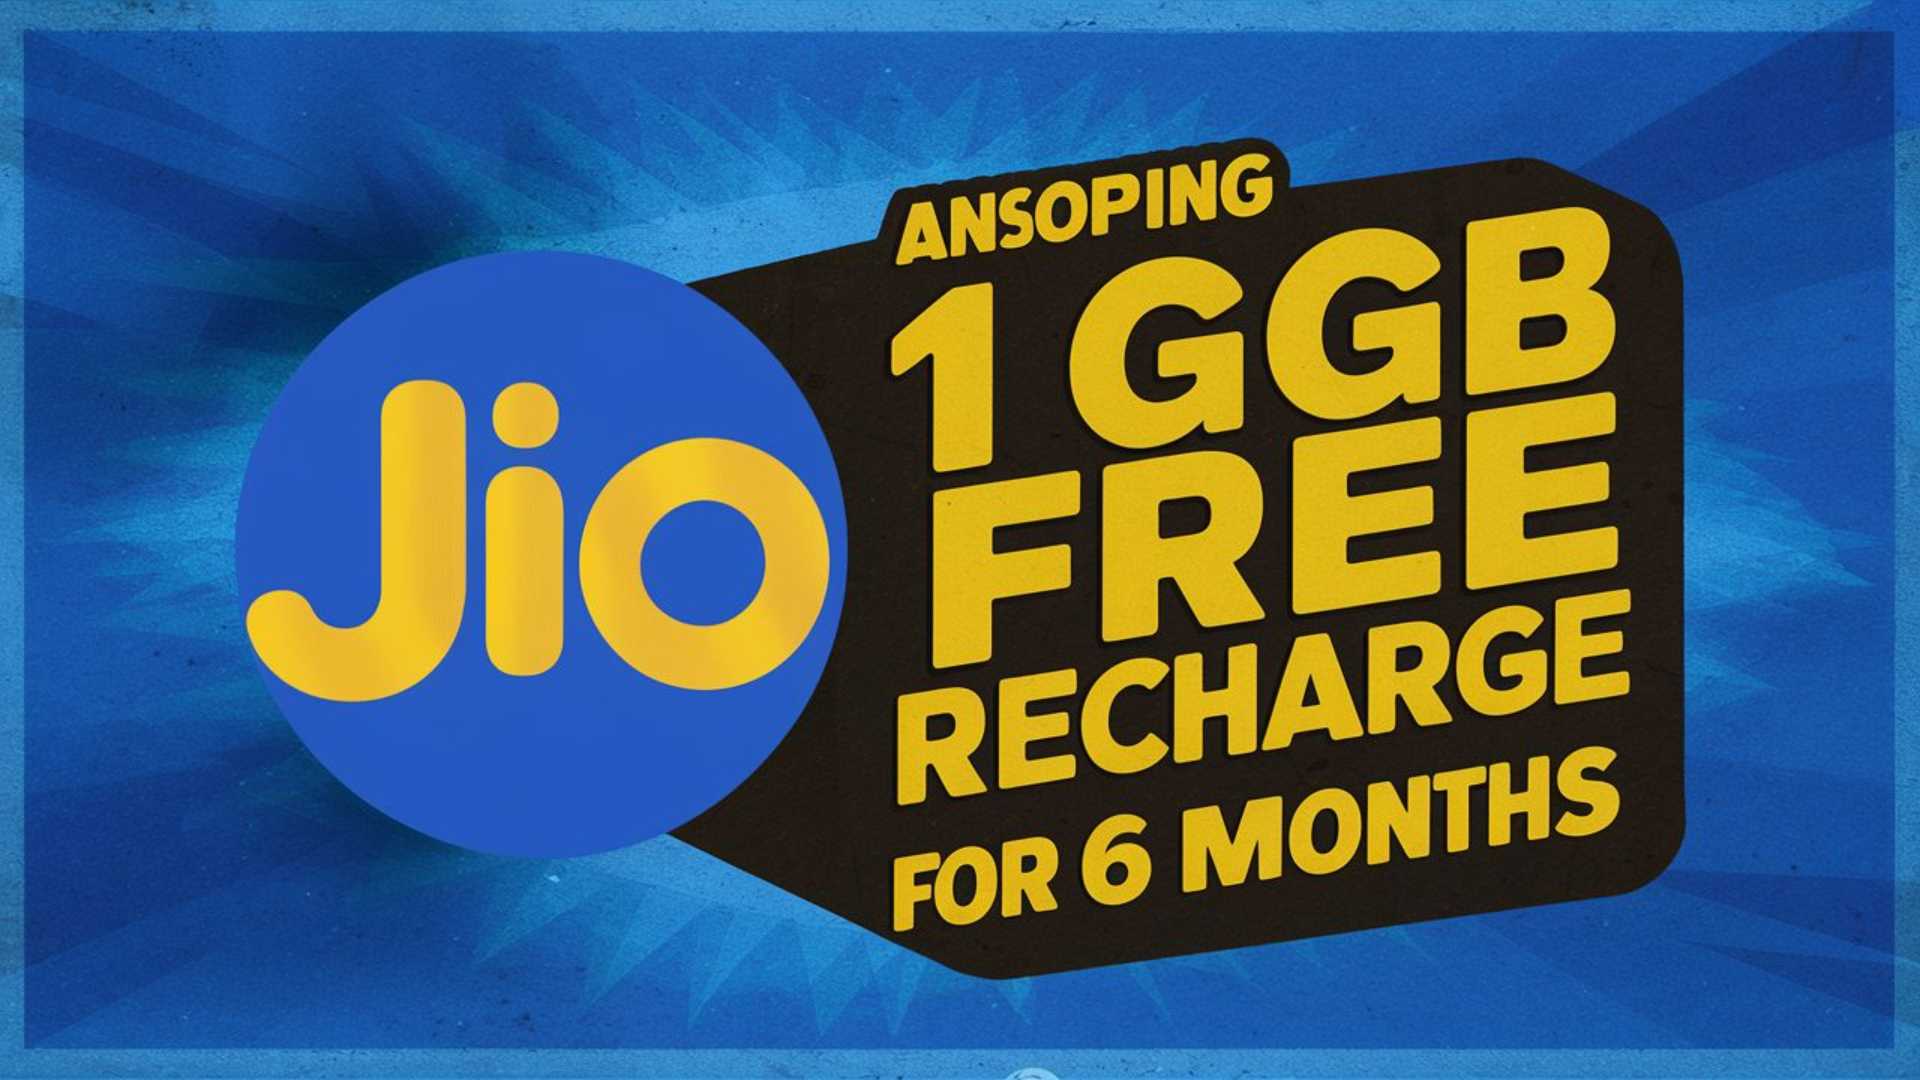 JIO Free Recharge